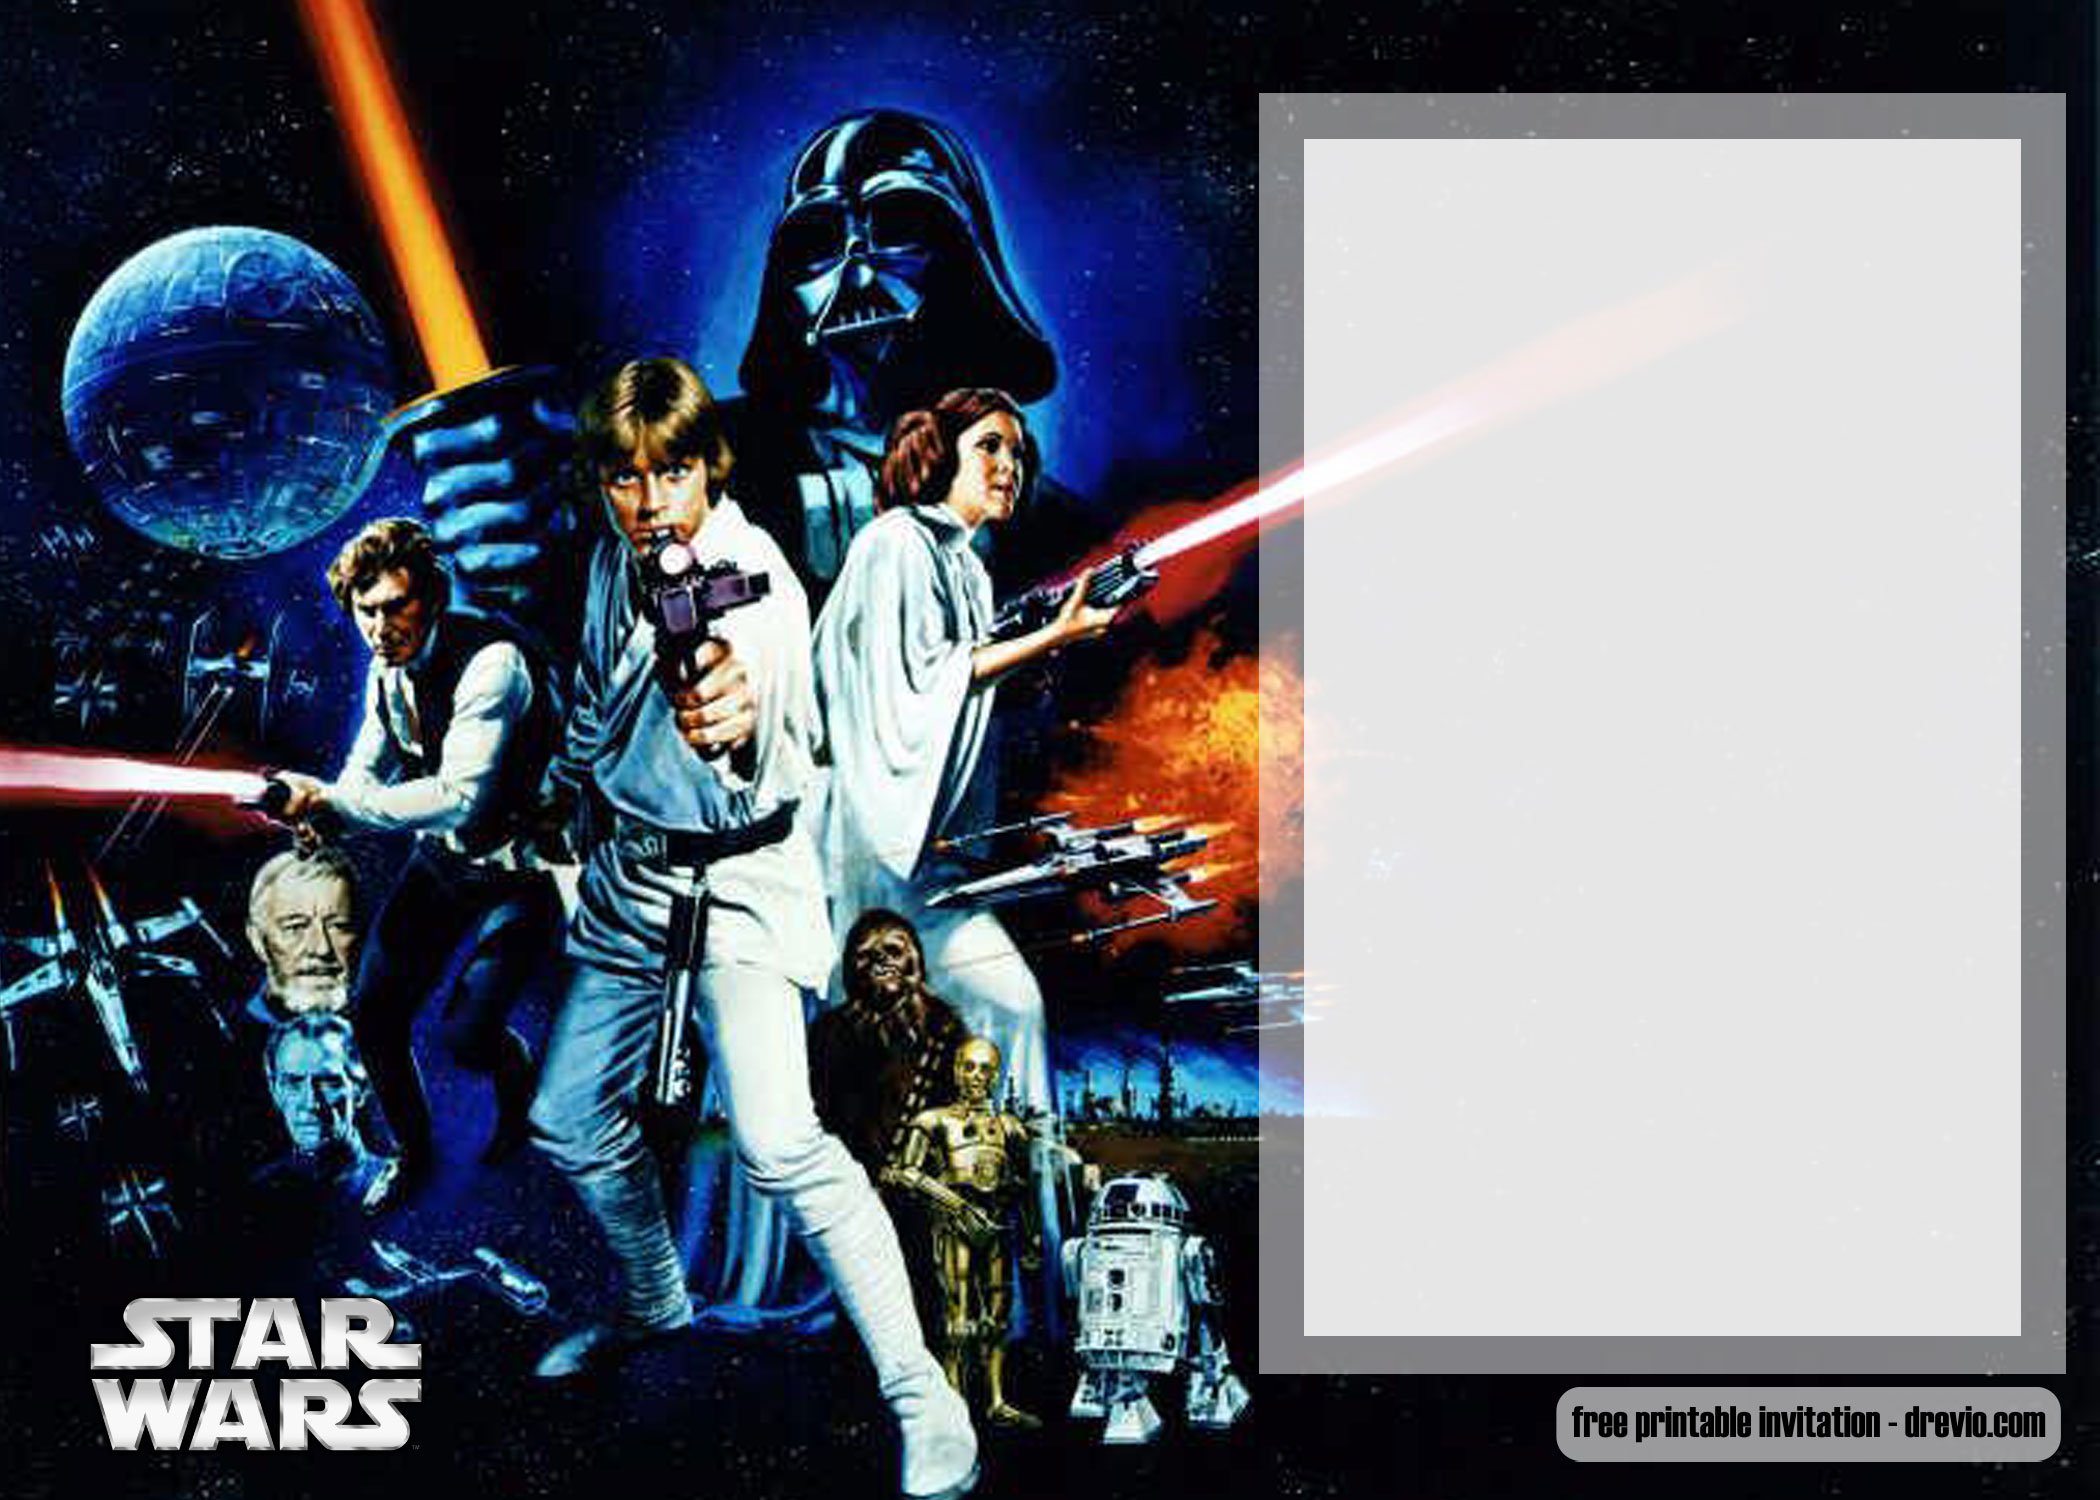 FREE Printable Star Wars Invitation Templates Download Hundreds FREE 